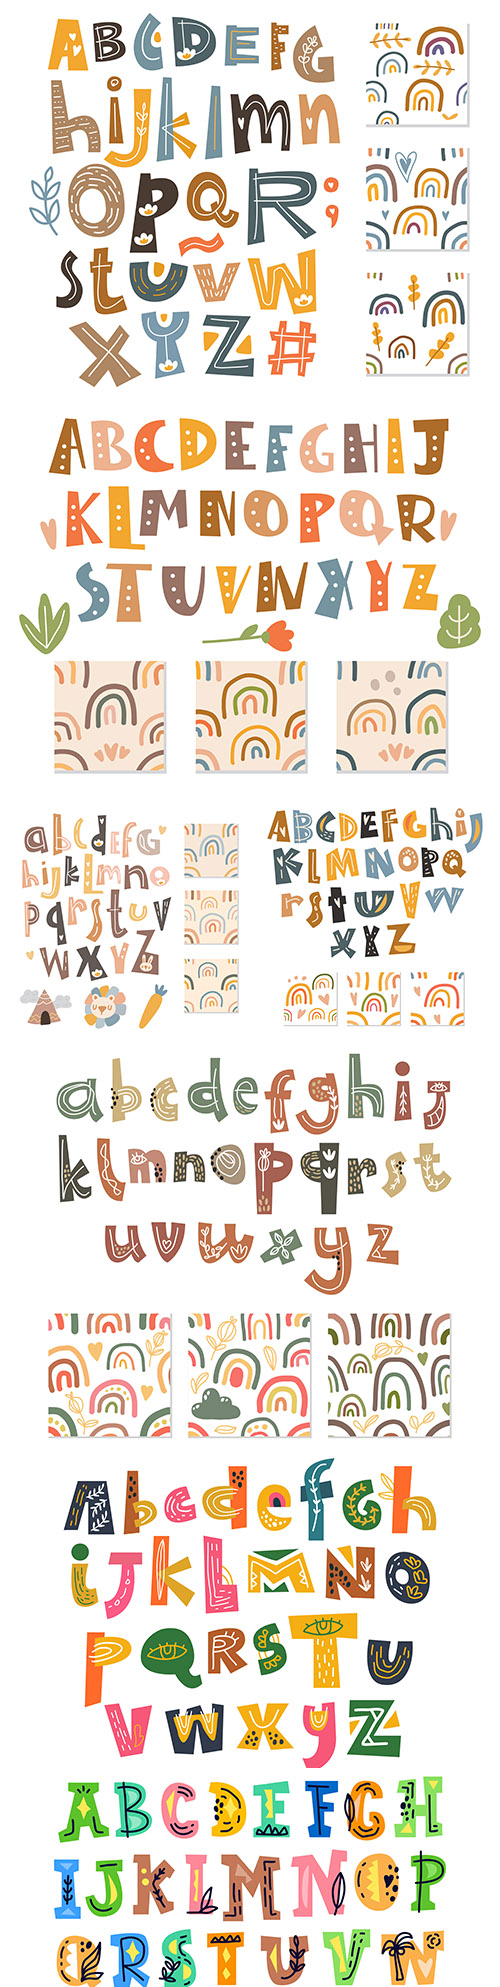 Scandinavian alphabet and seamless background set of elements